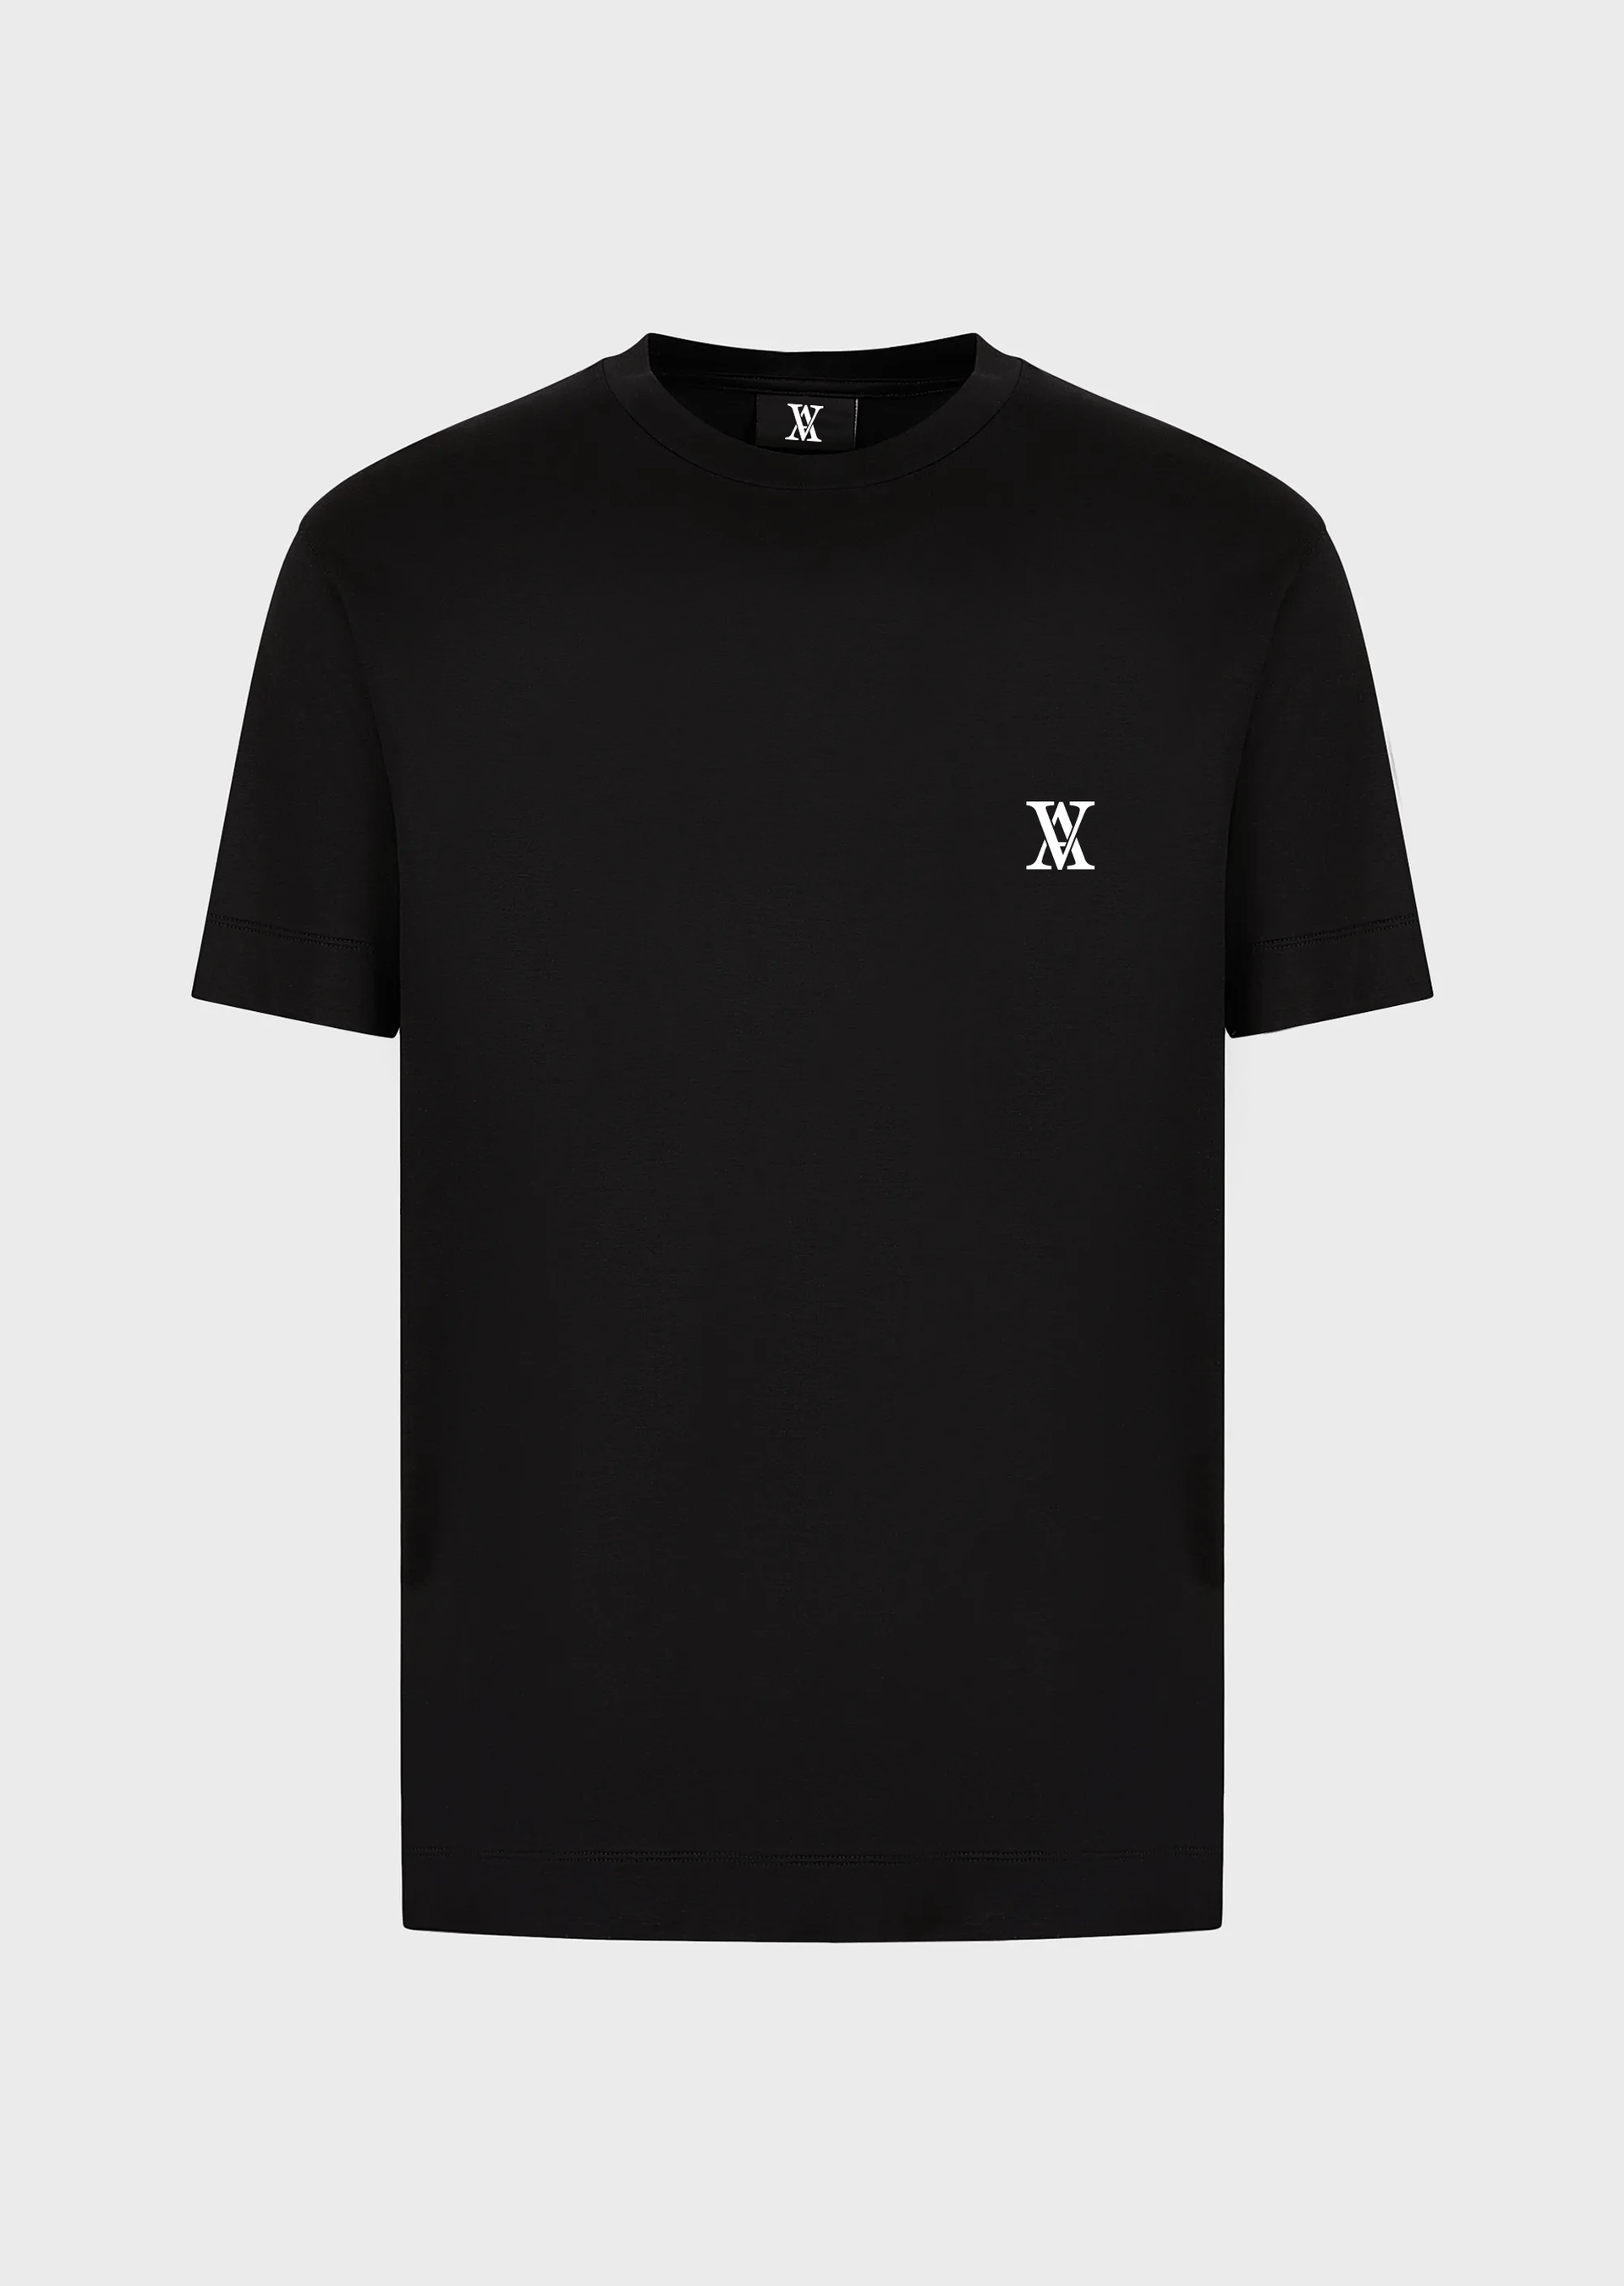 The Virtus T-Shirt – Virtus Apparel Store